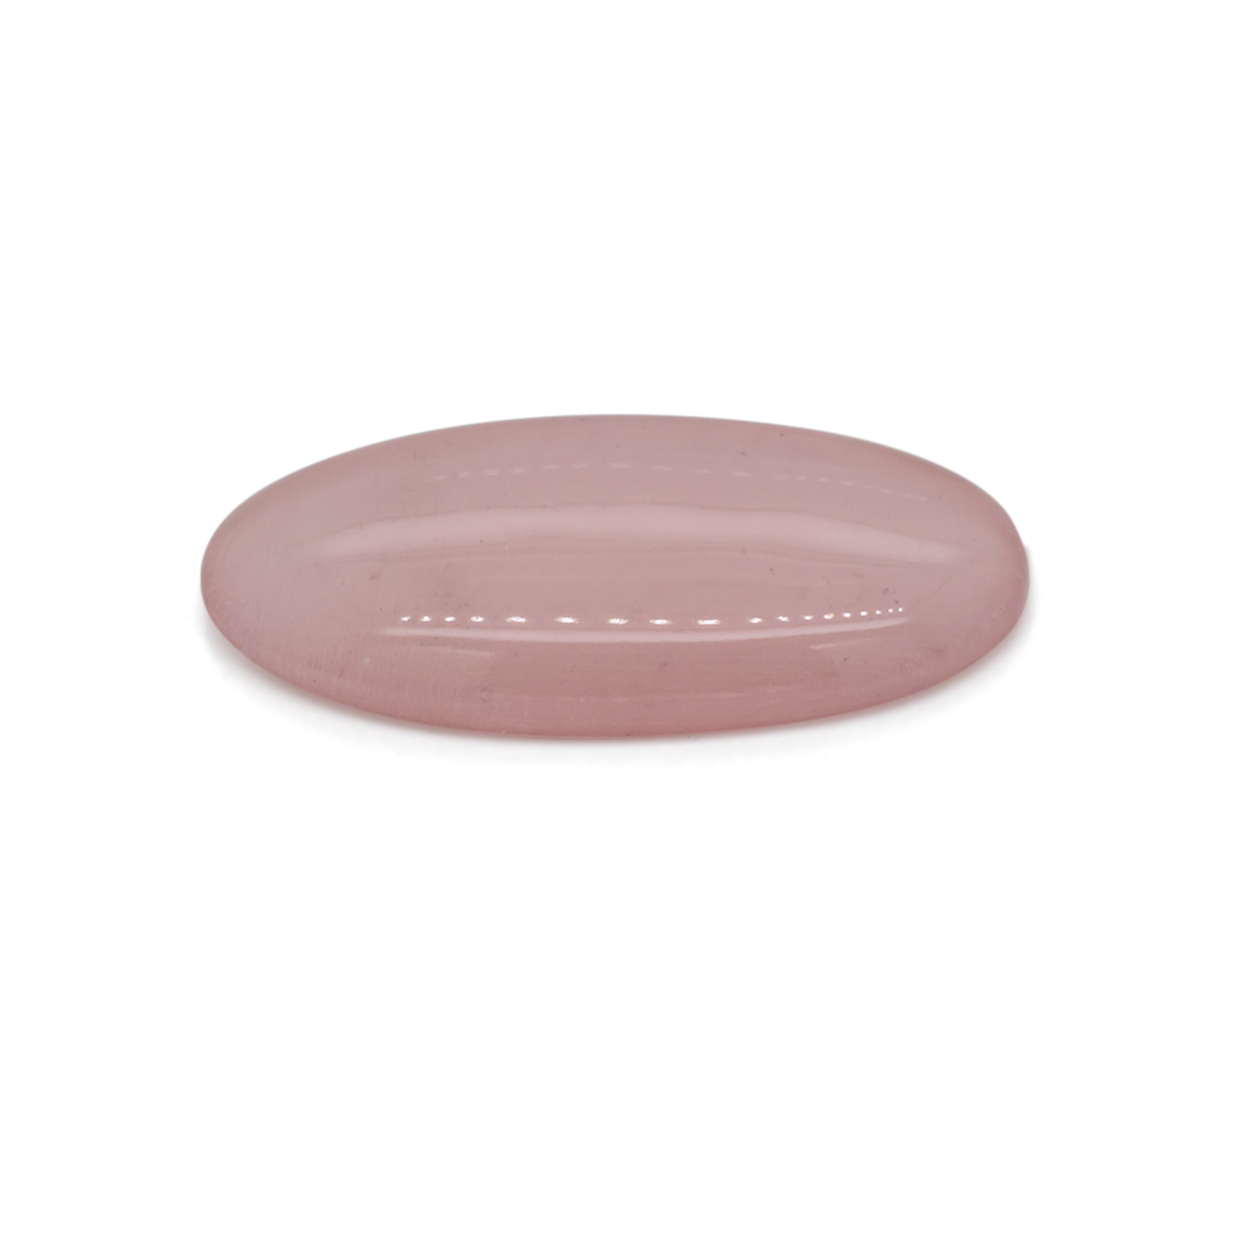 Rose quarz - pink, oval, 19.3x9.6 mm, 4.84 cts, No. RO00005